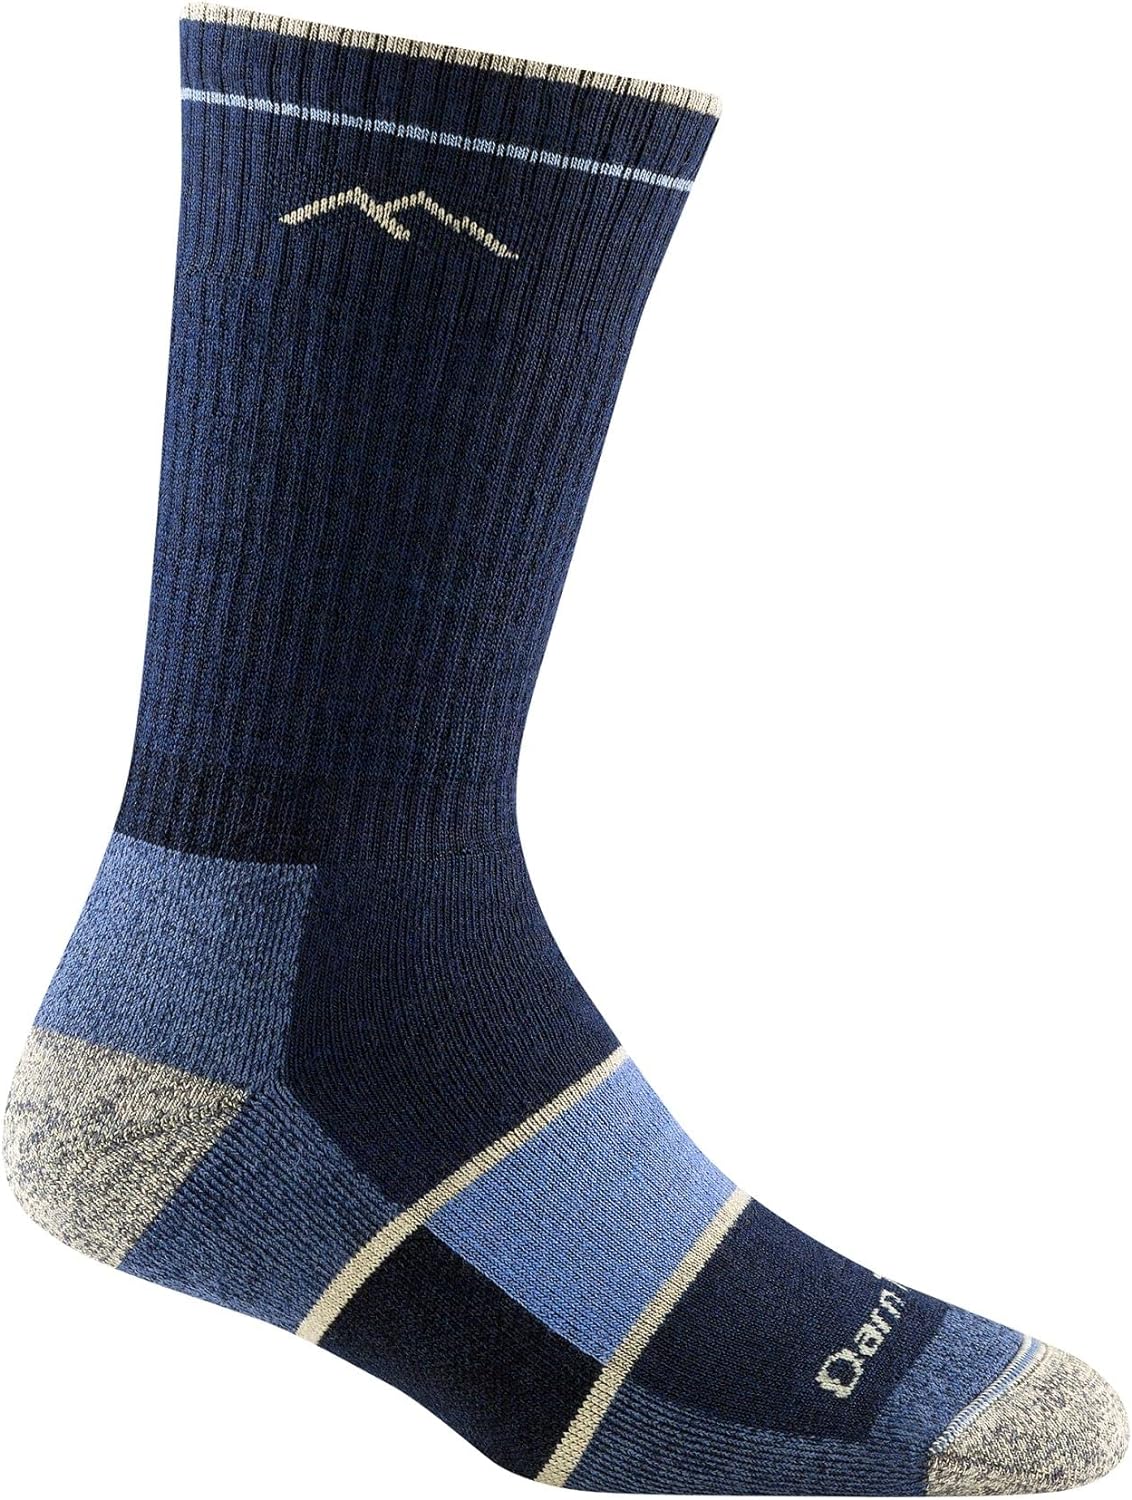 Darn Tough Hiker Boot Full-Cushion Socks - Men's